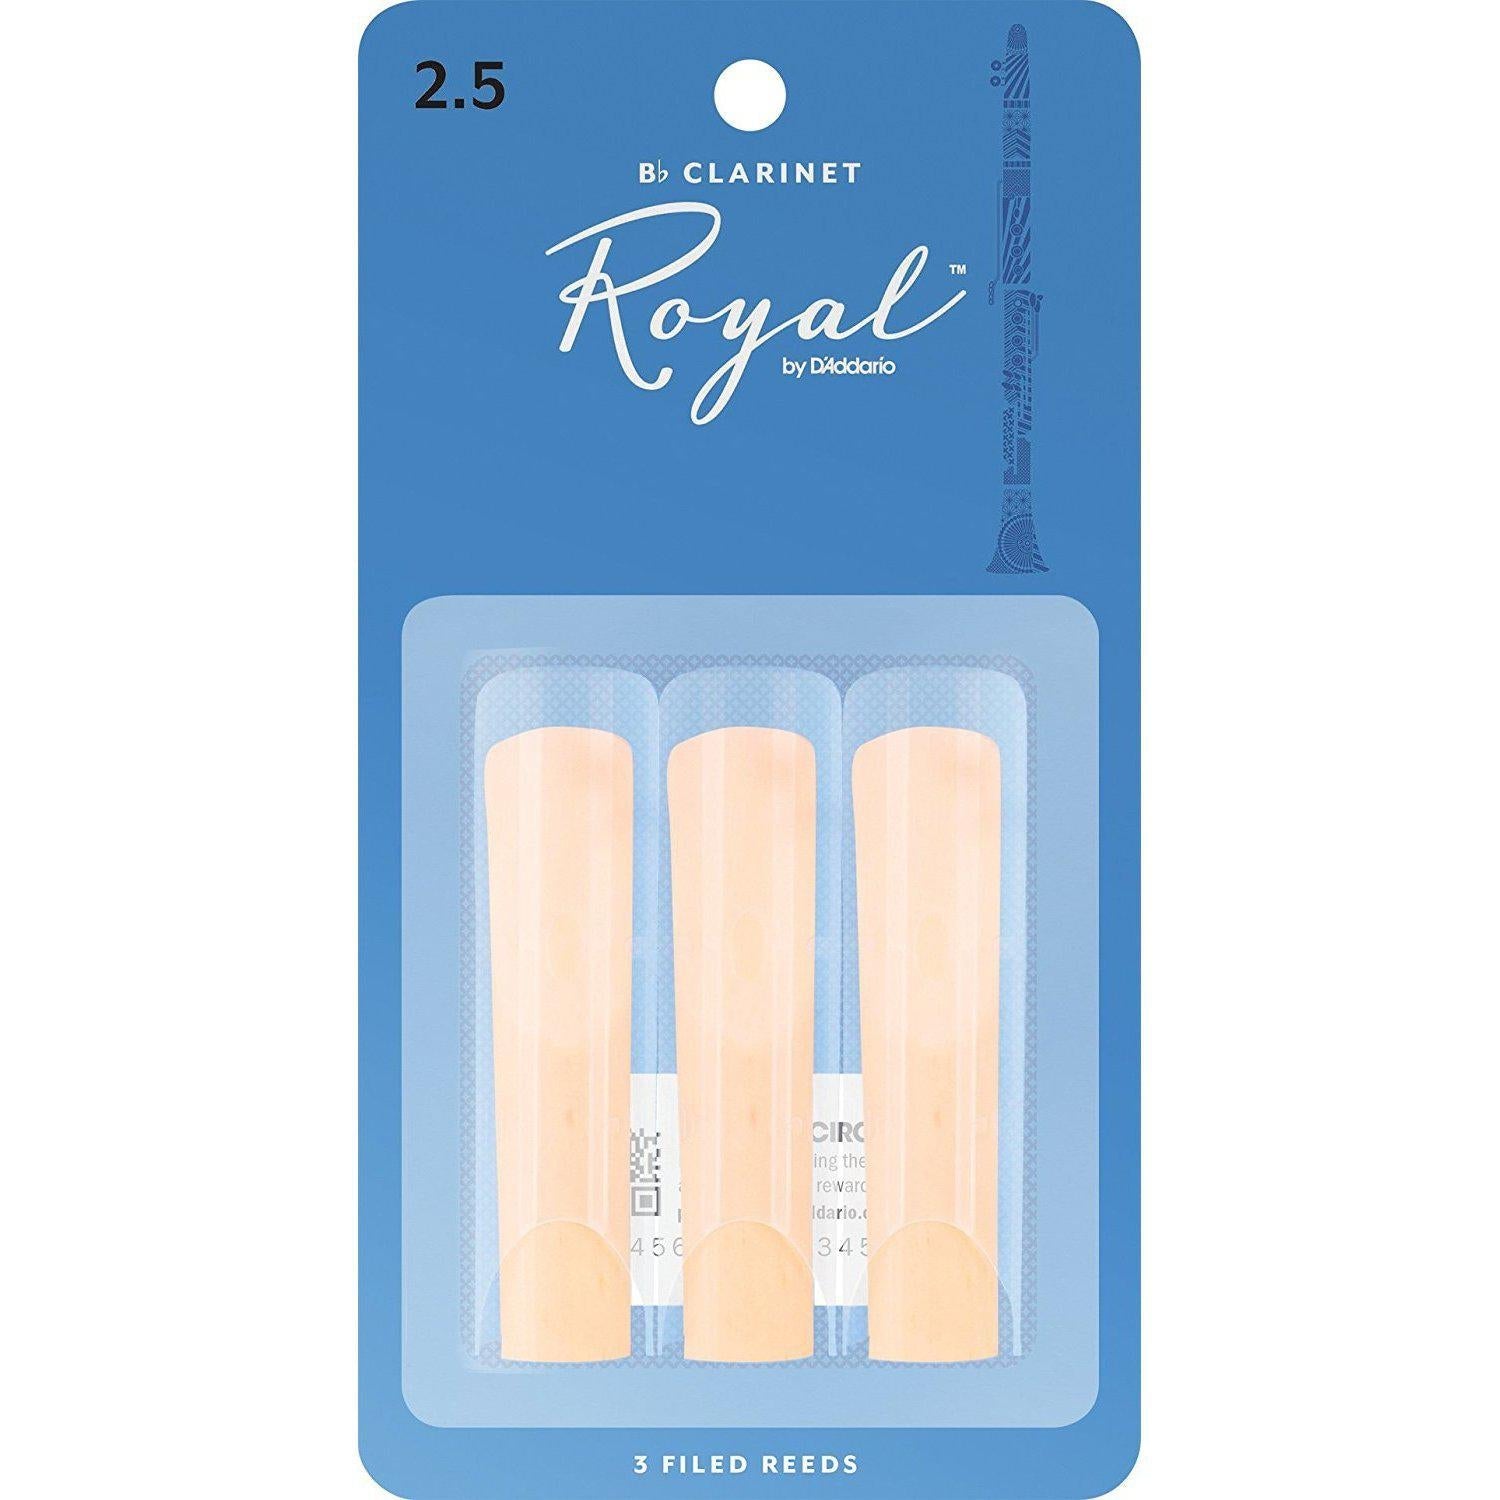 Royal by D'Addario Bb Clarinet Reeds - 2.5